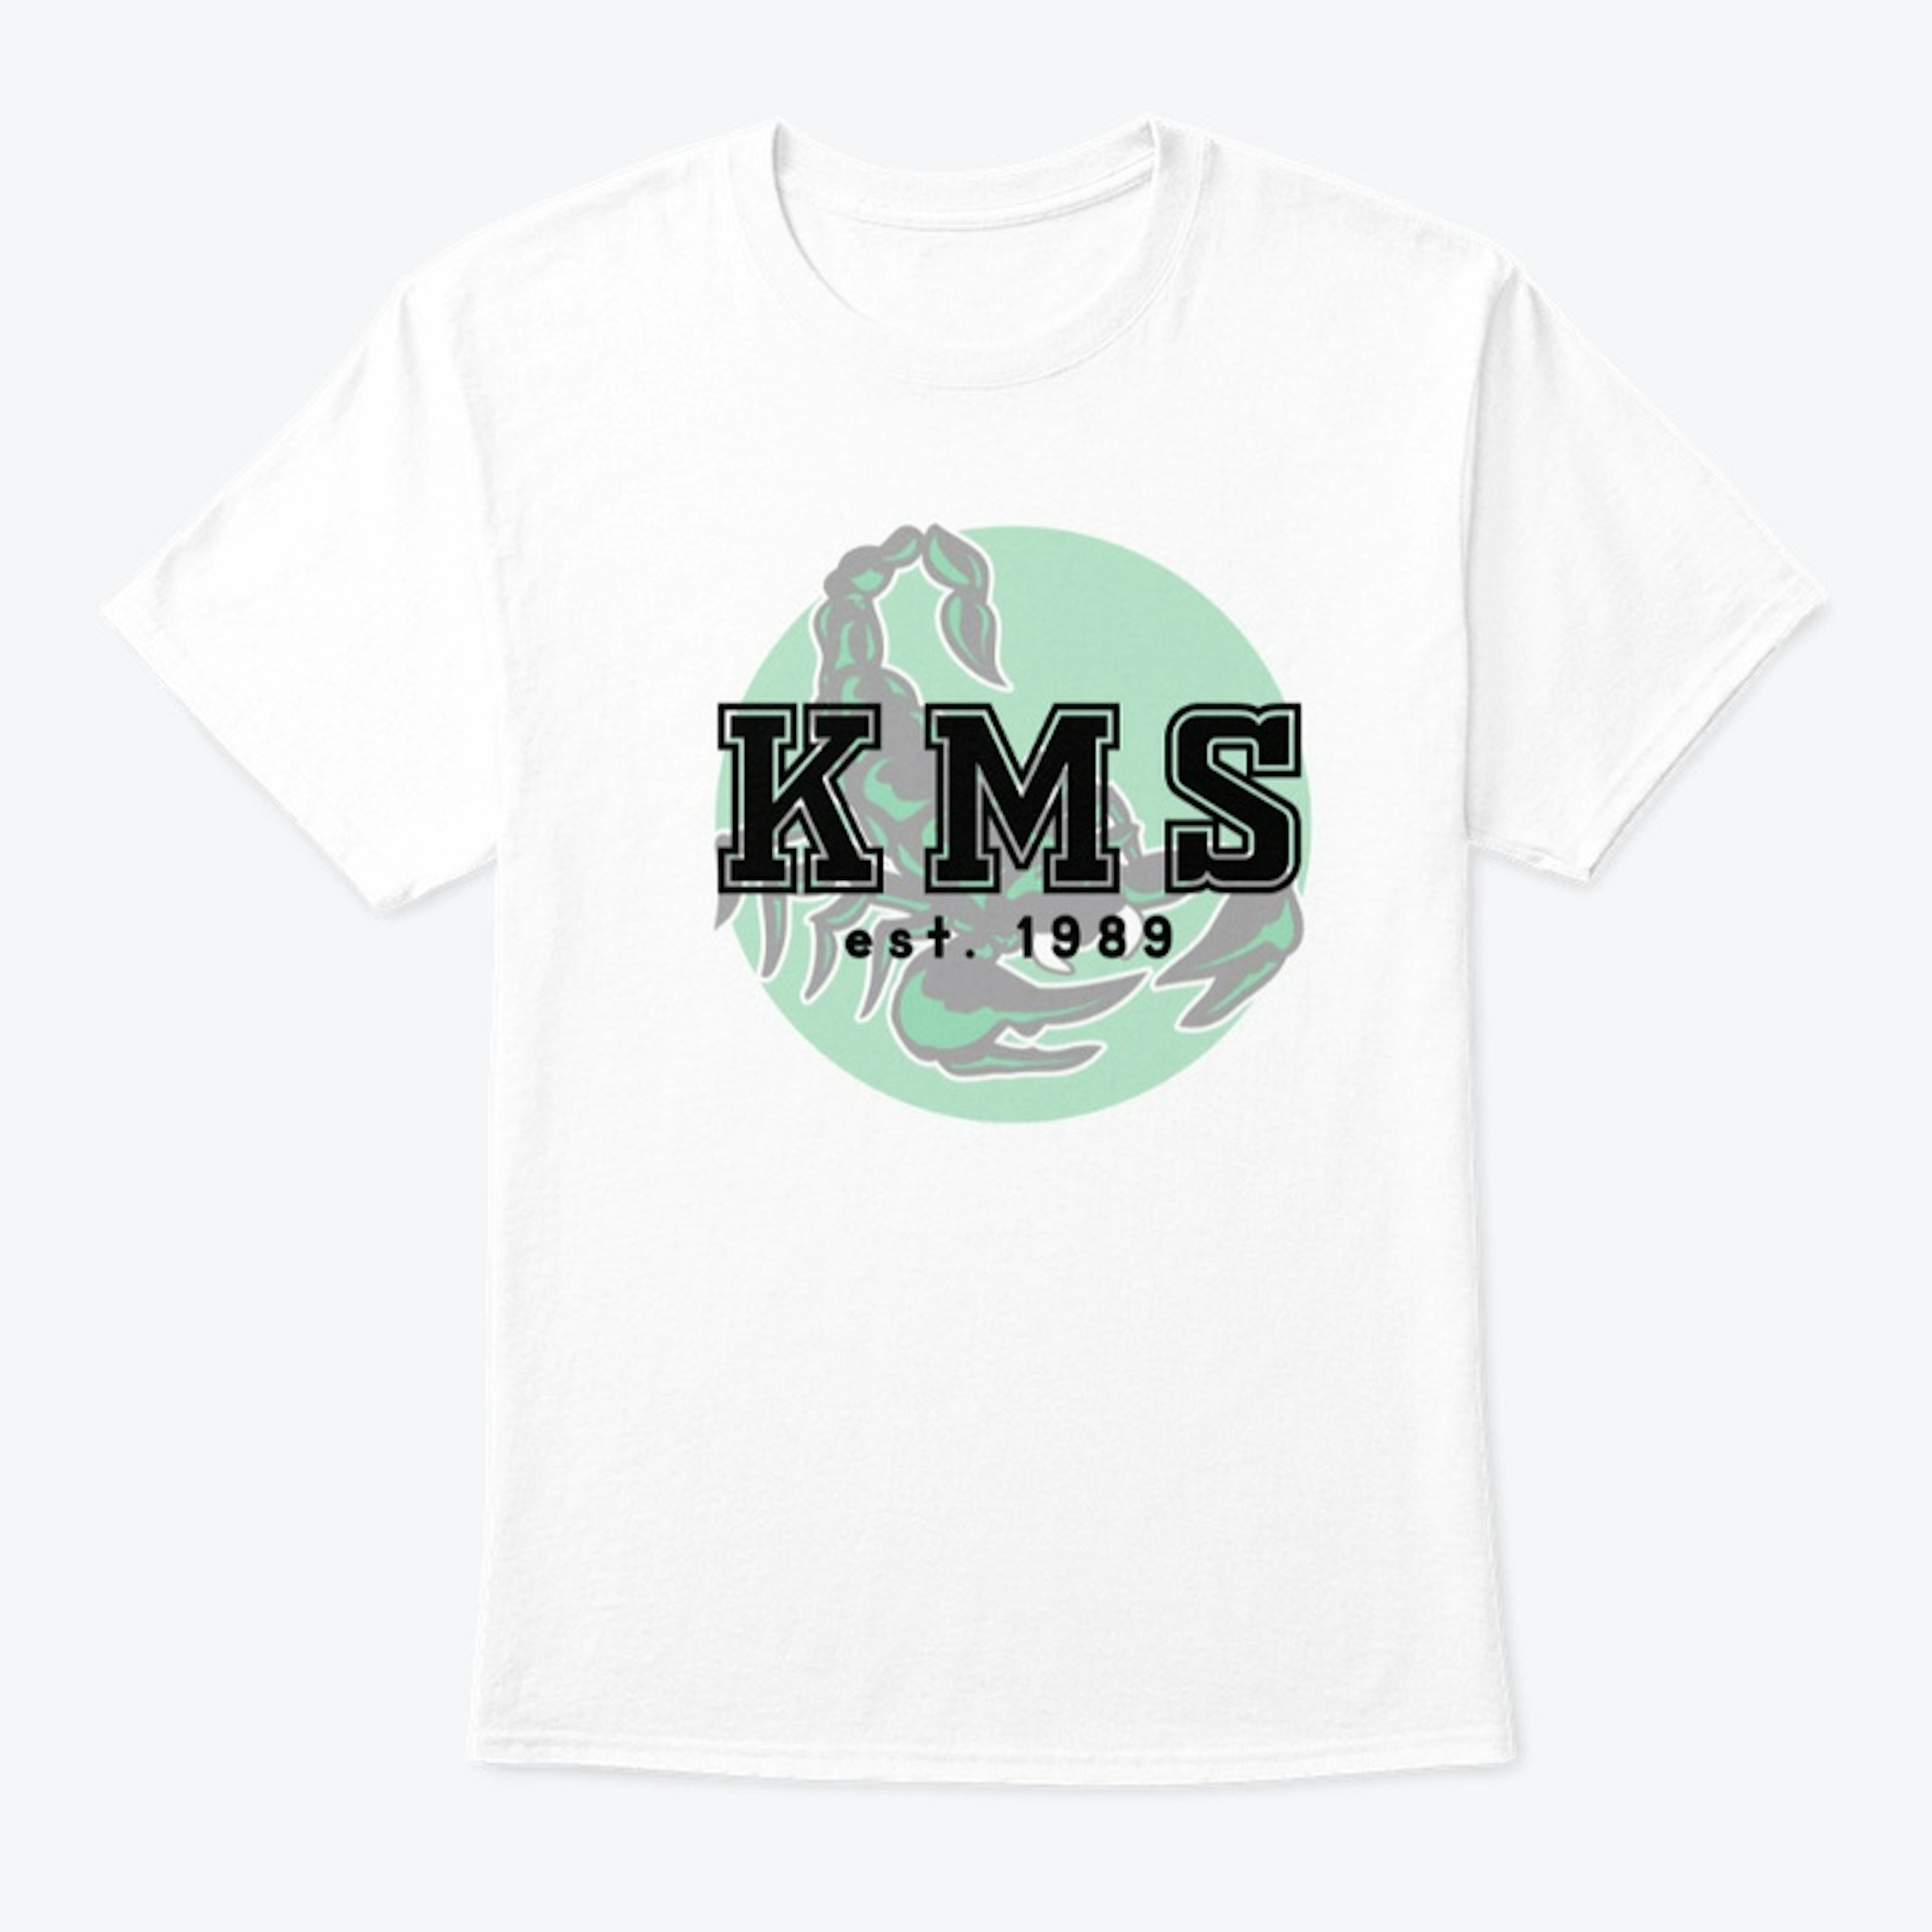 KMS est. 1989 - green background